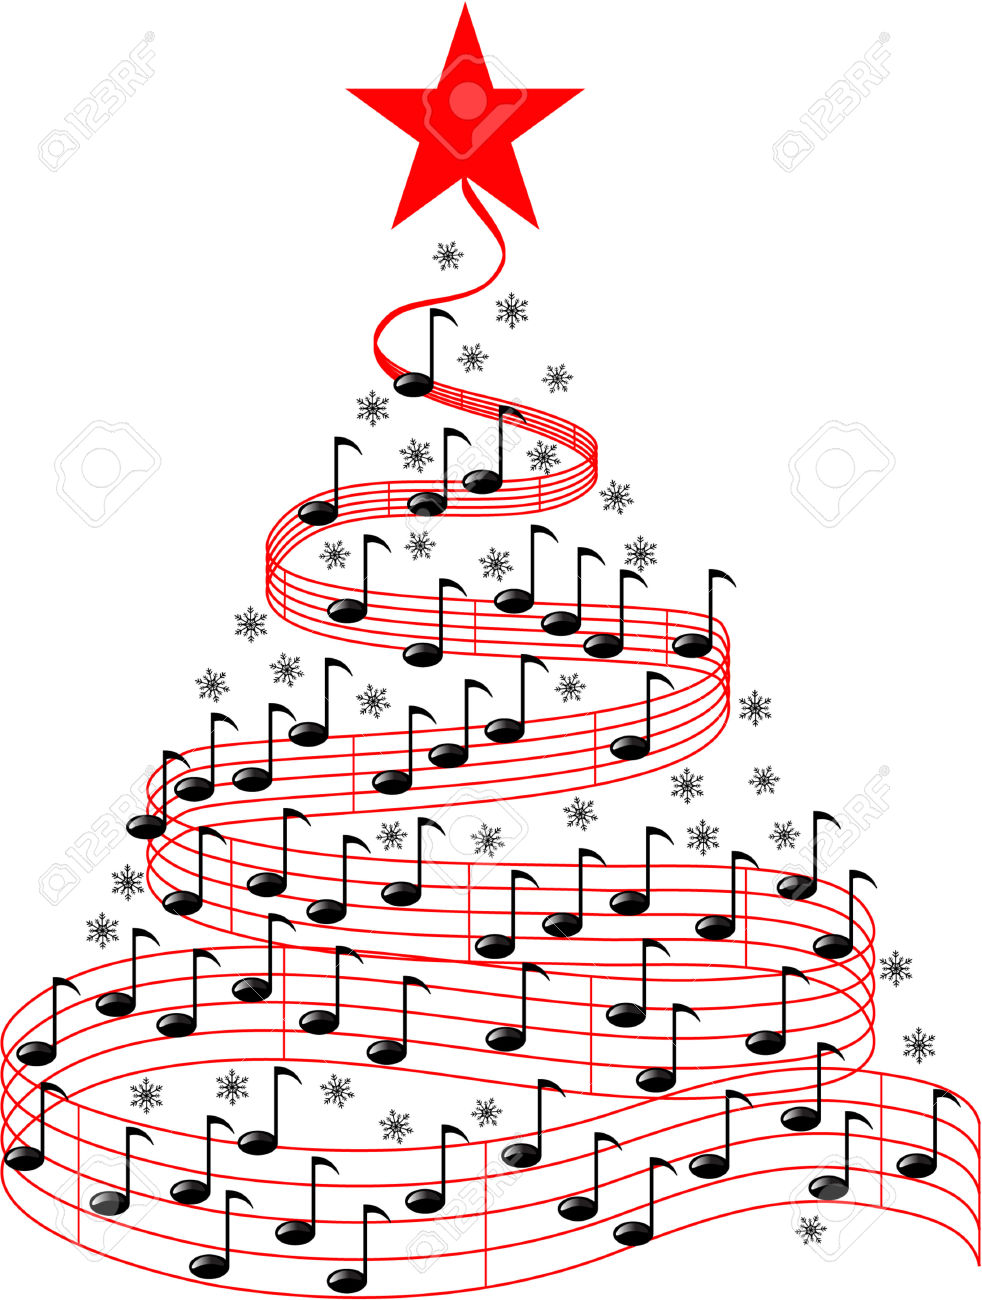 Free Christmas Music Clip Art